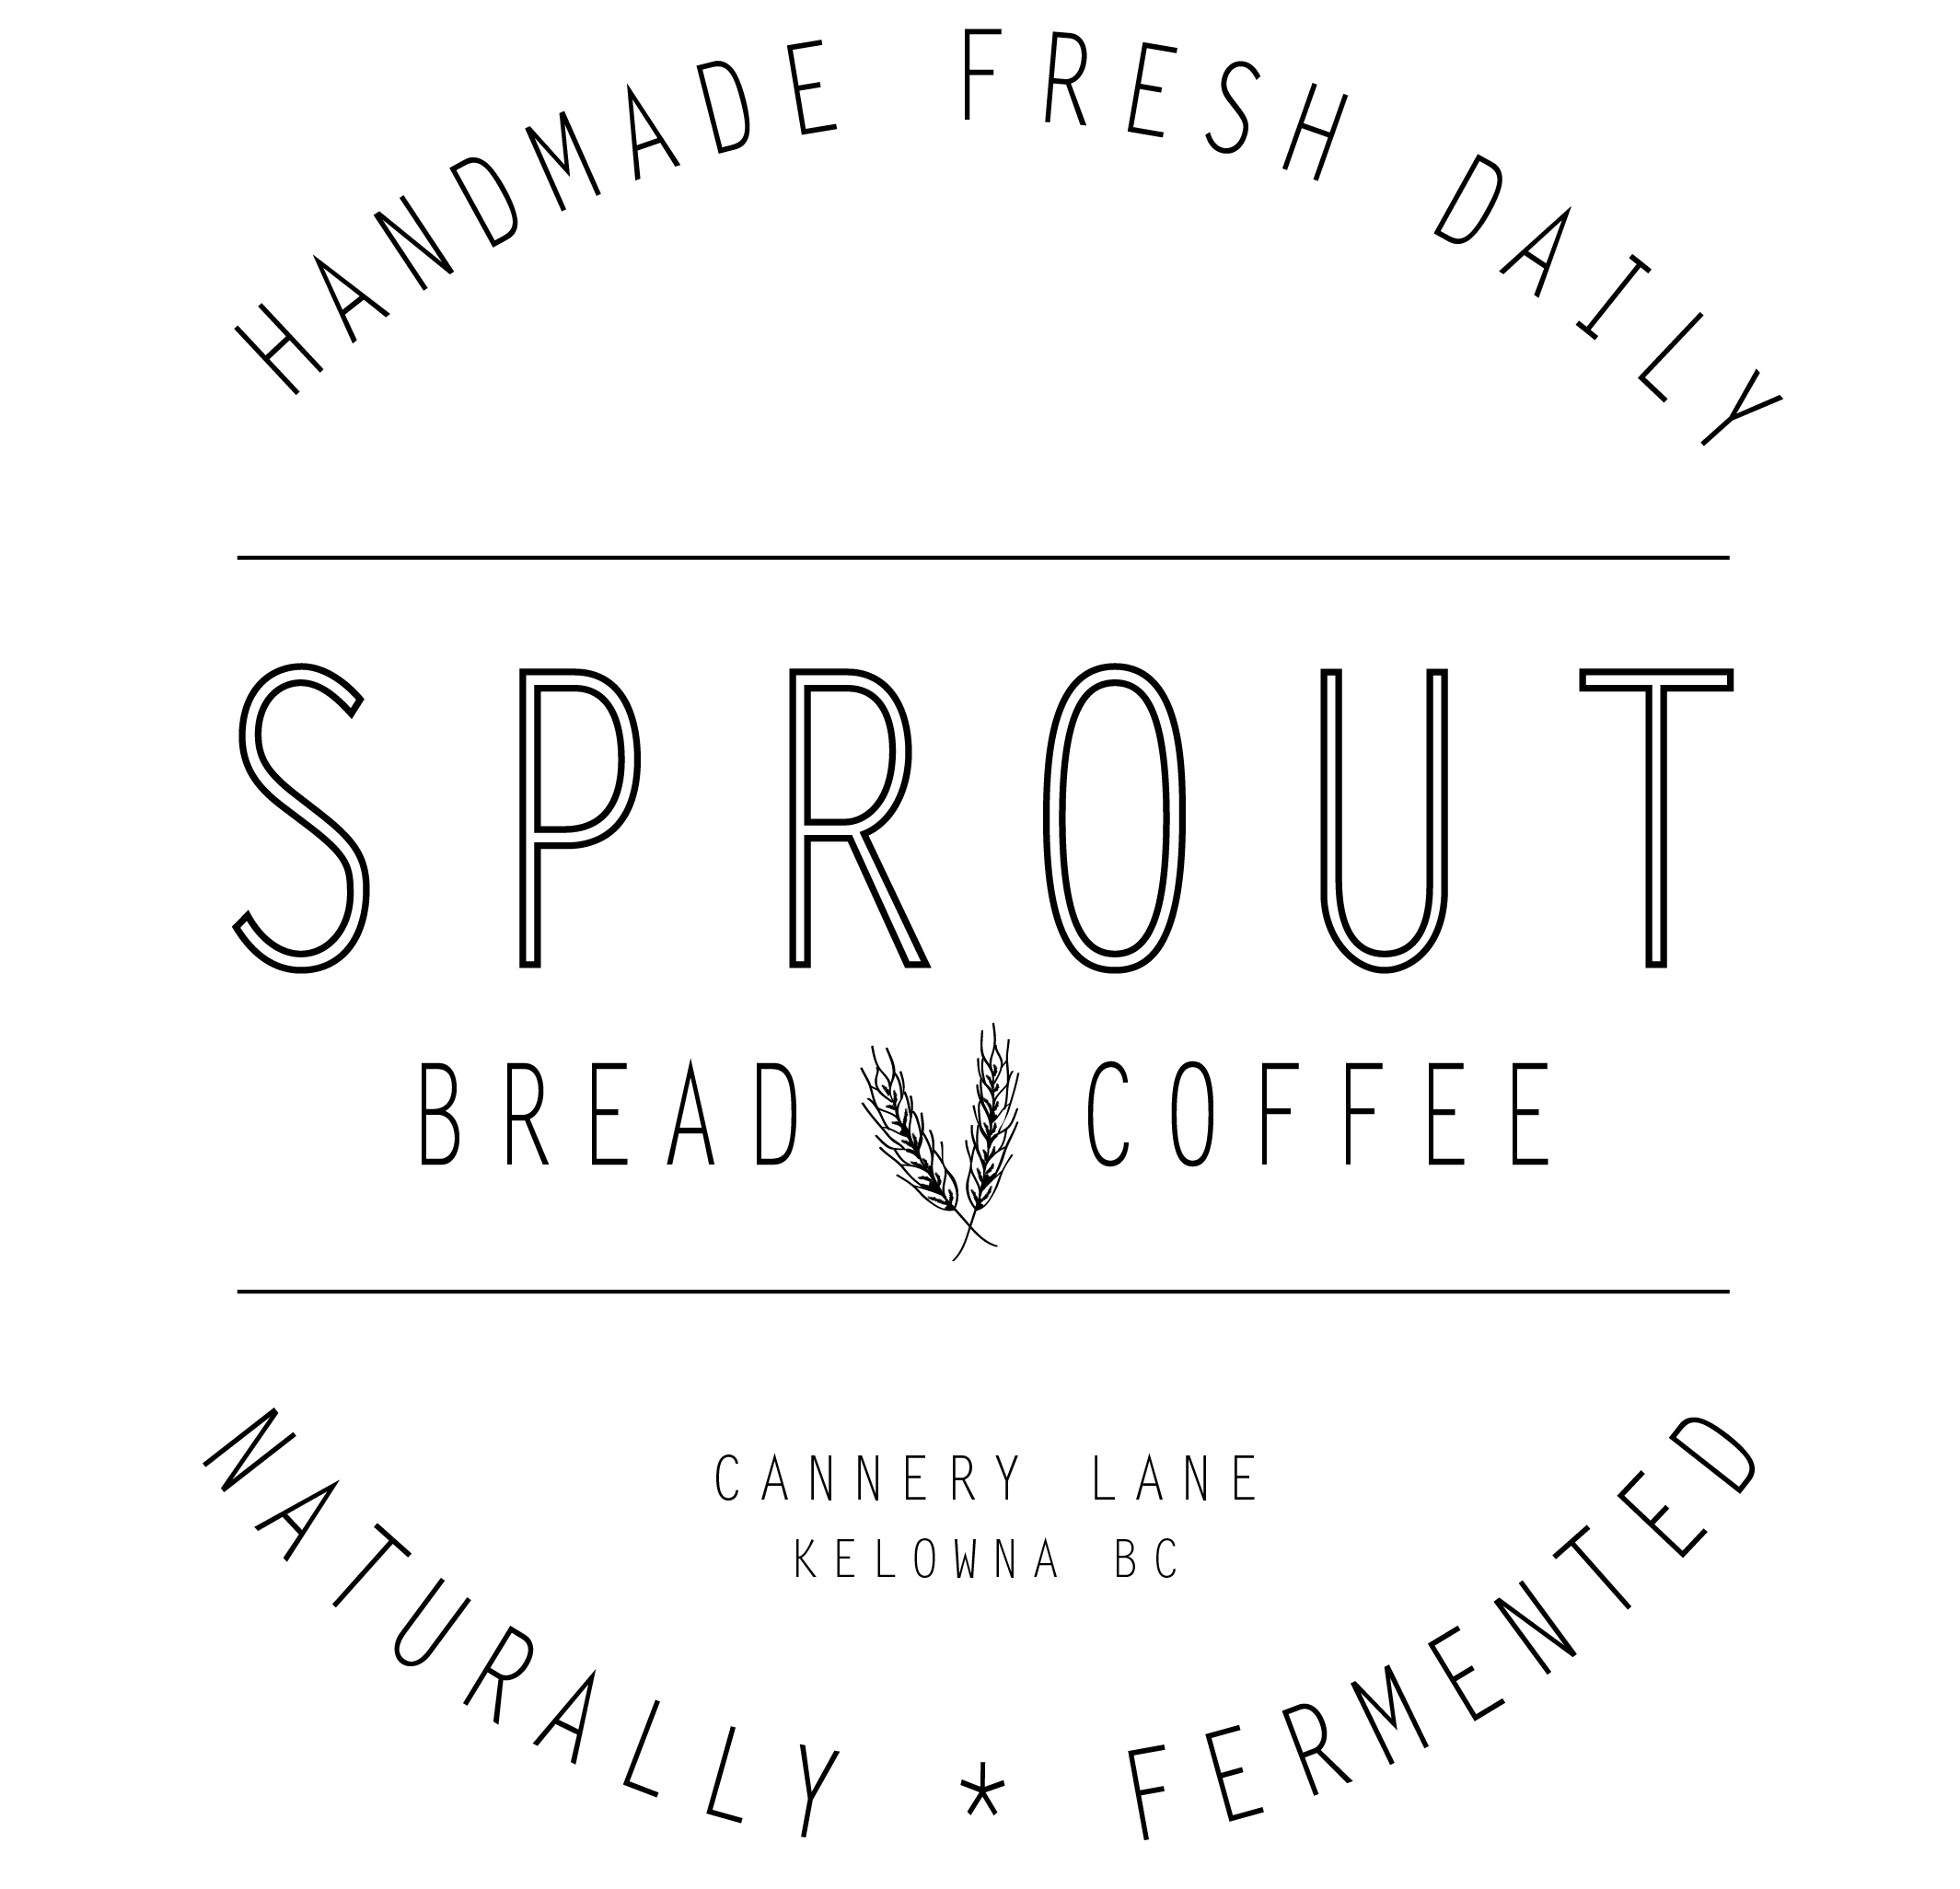 Sprout Bread Ltd.